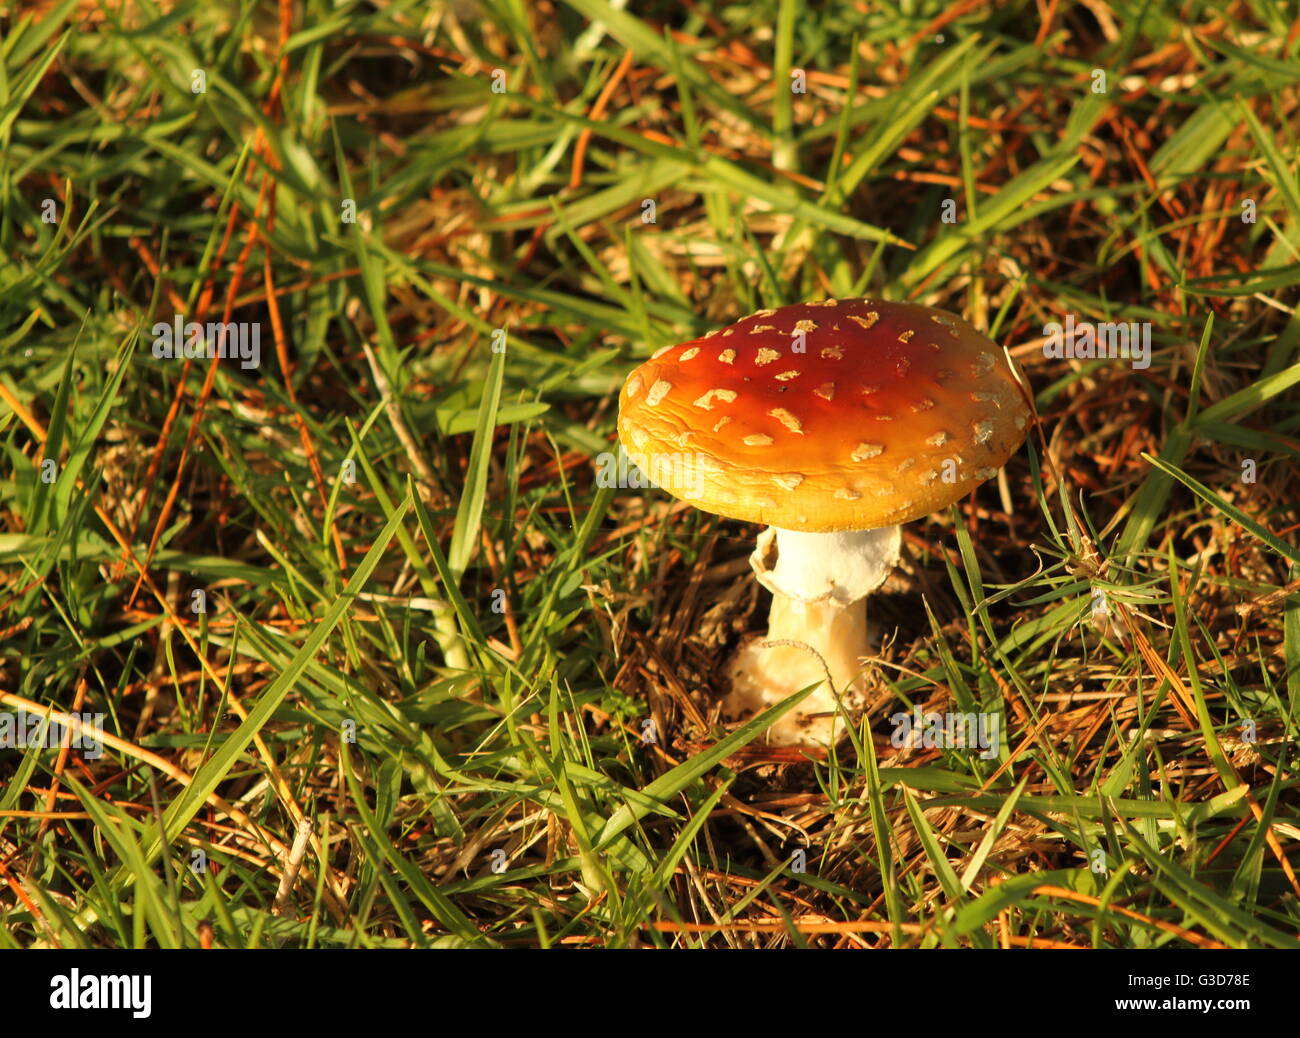 Mushroom in grass Stock Photo